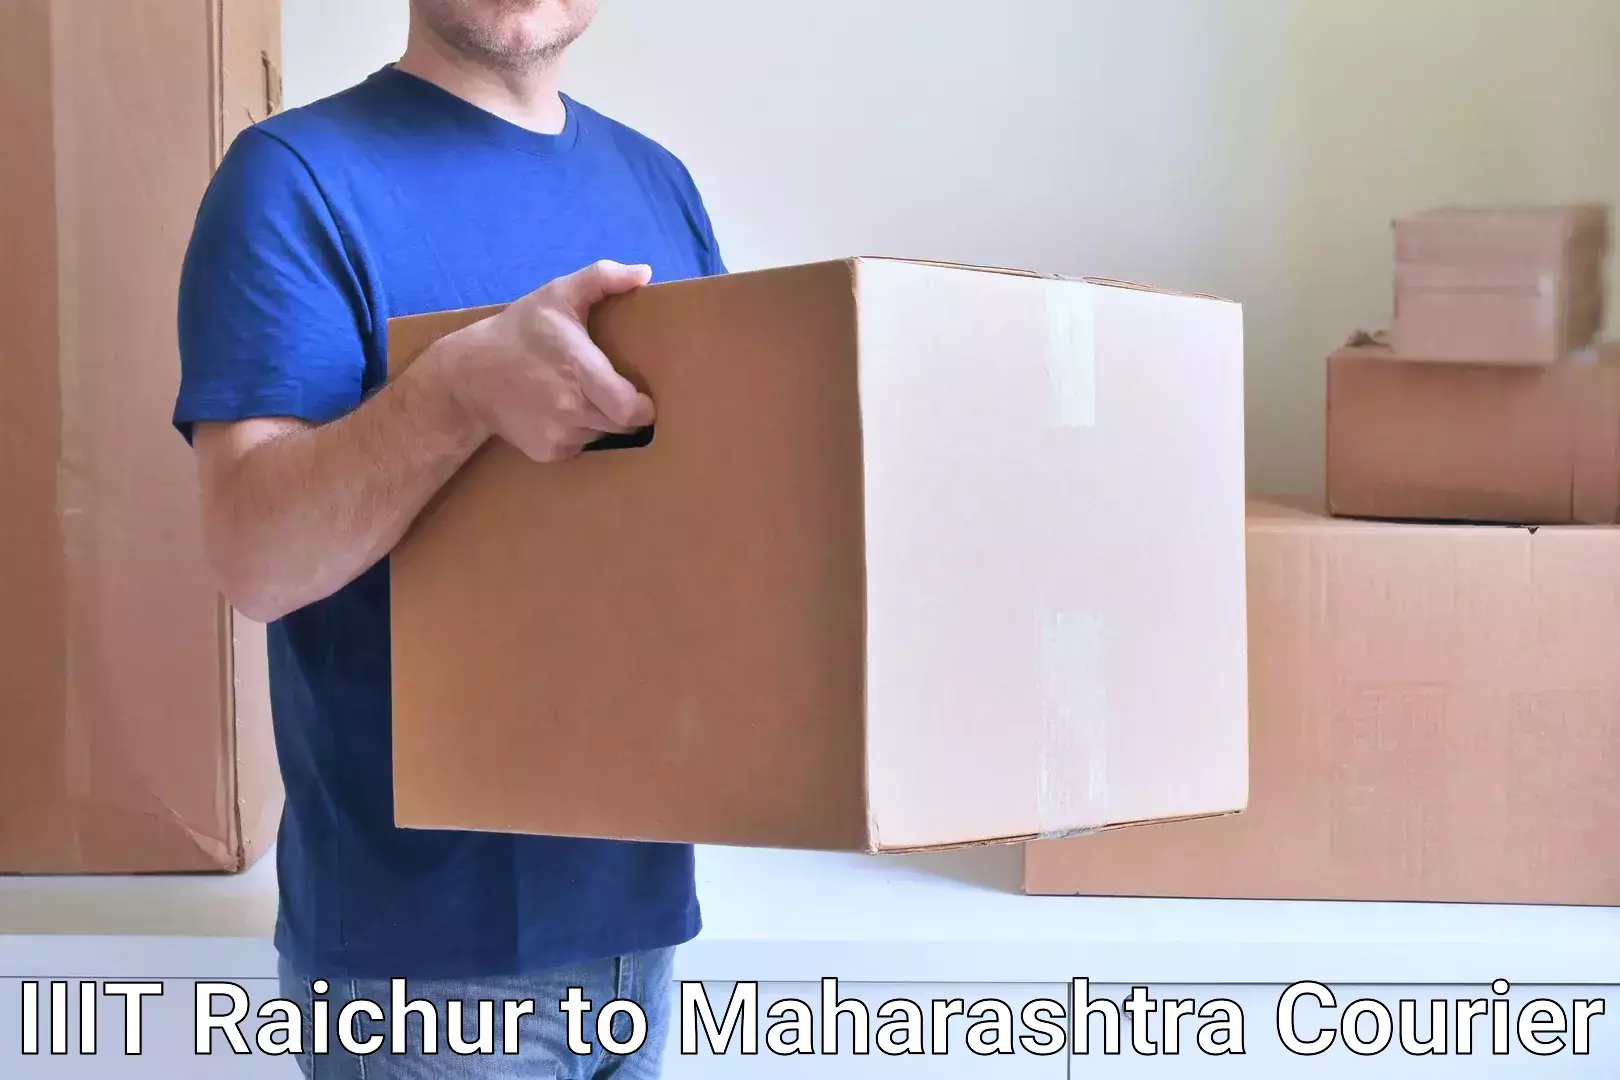 Express mail solutions IIIT Raichur to Maharashtra